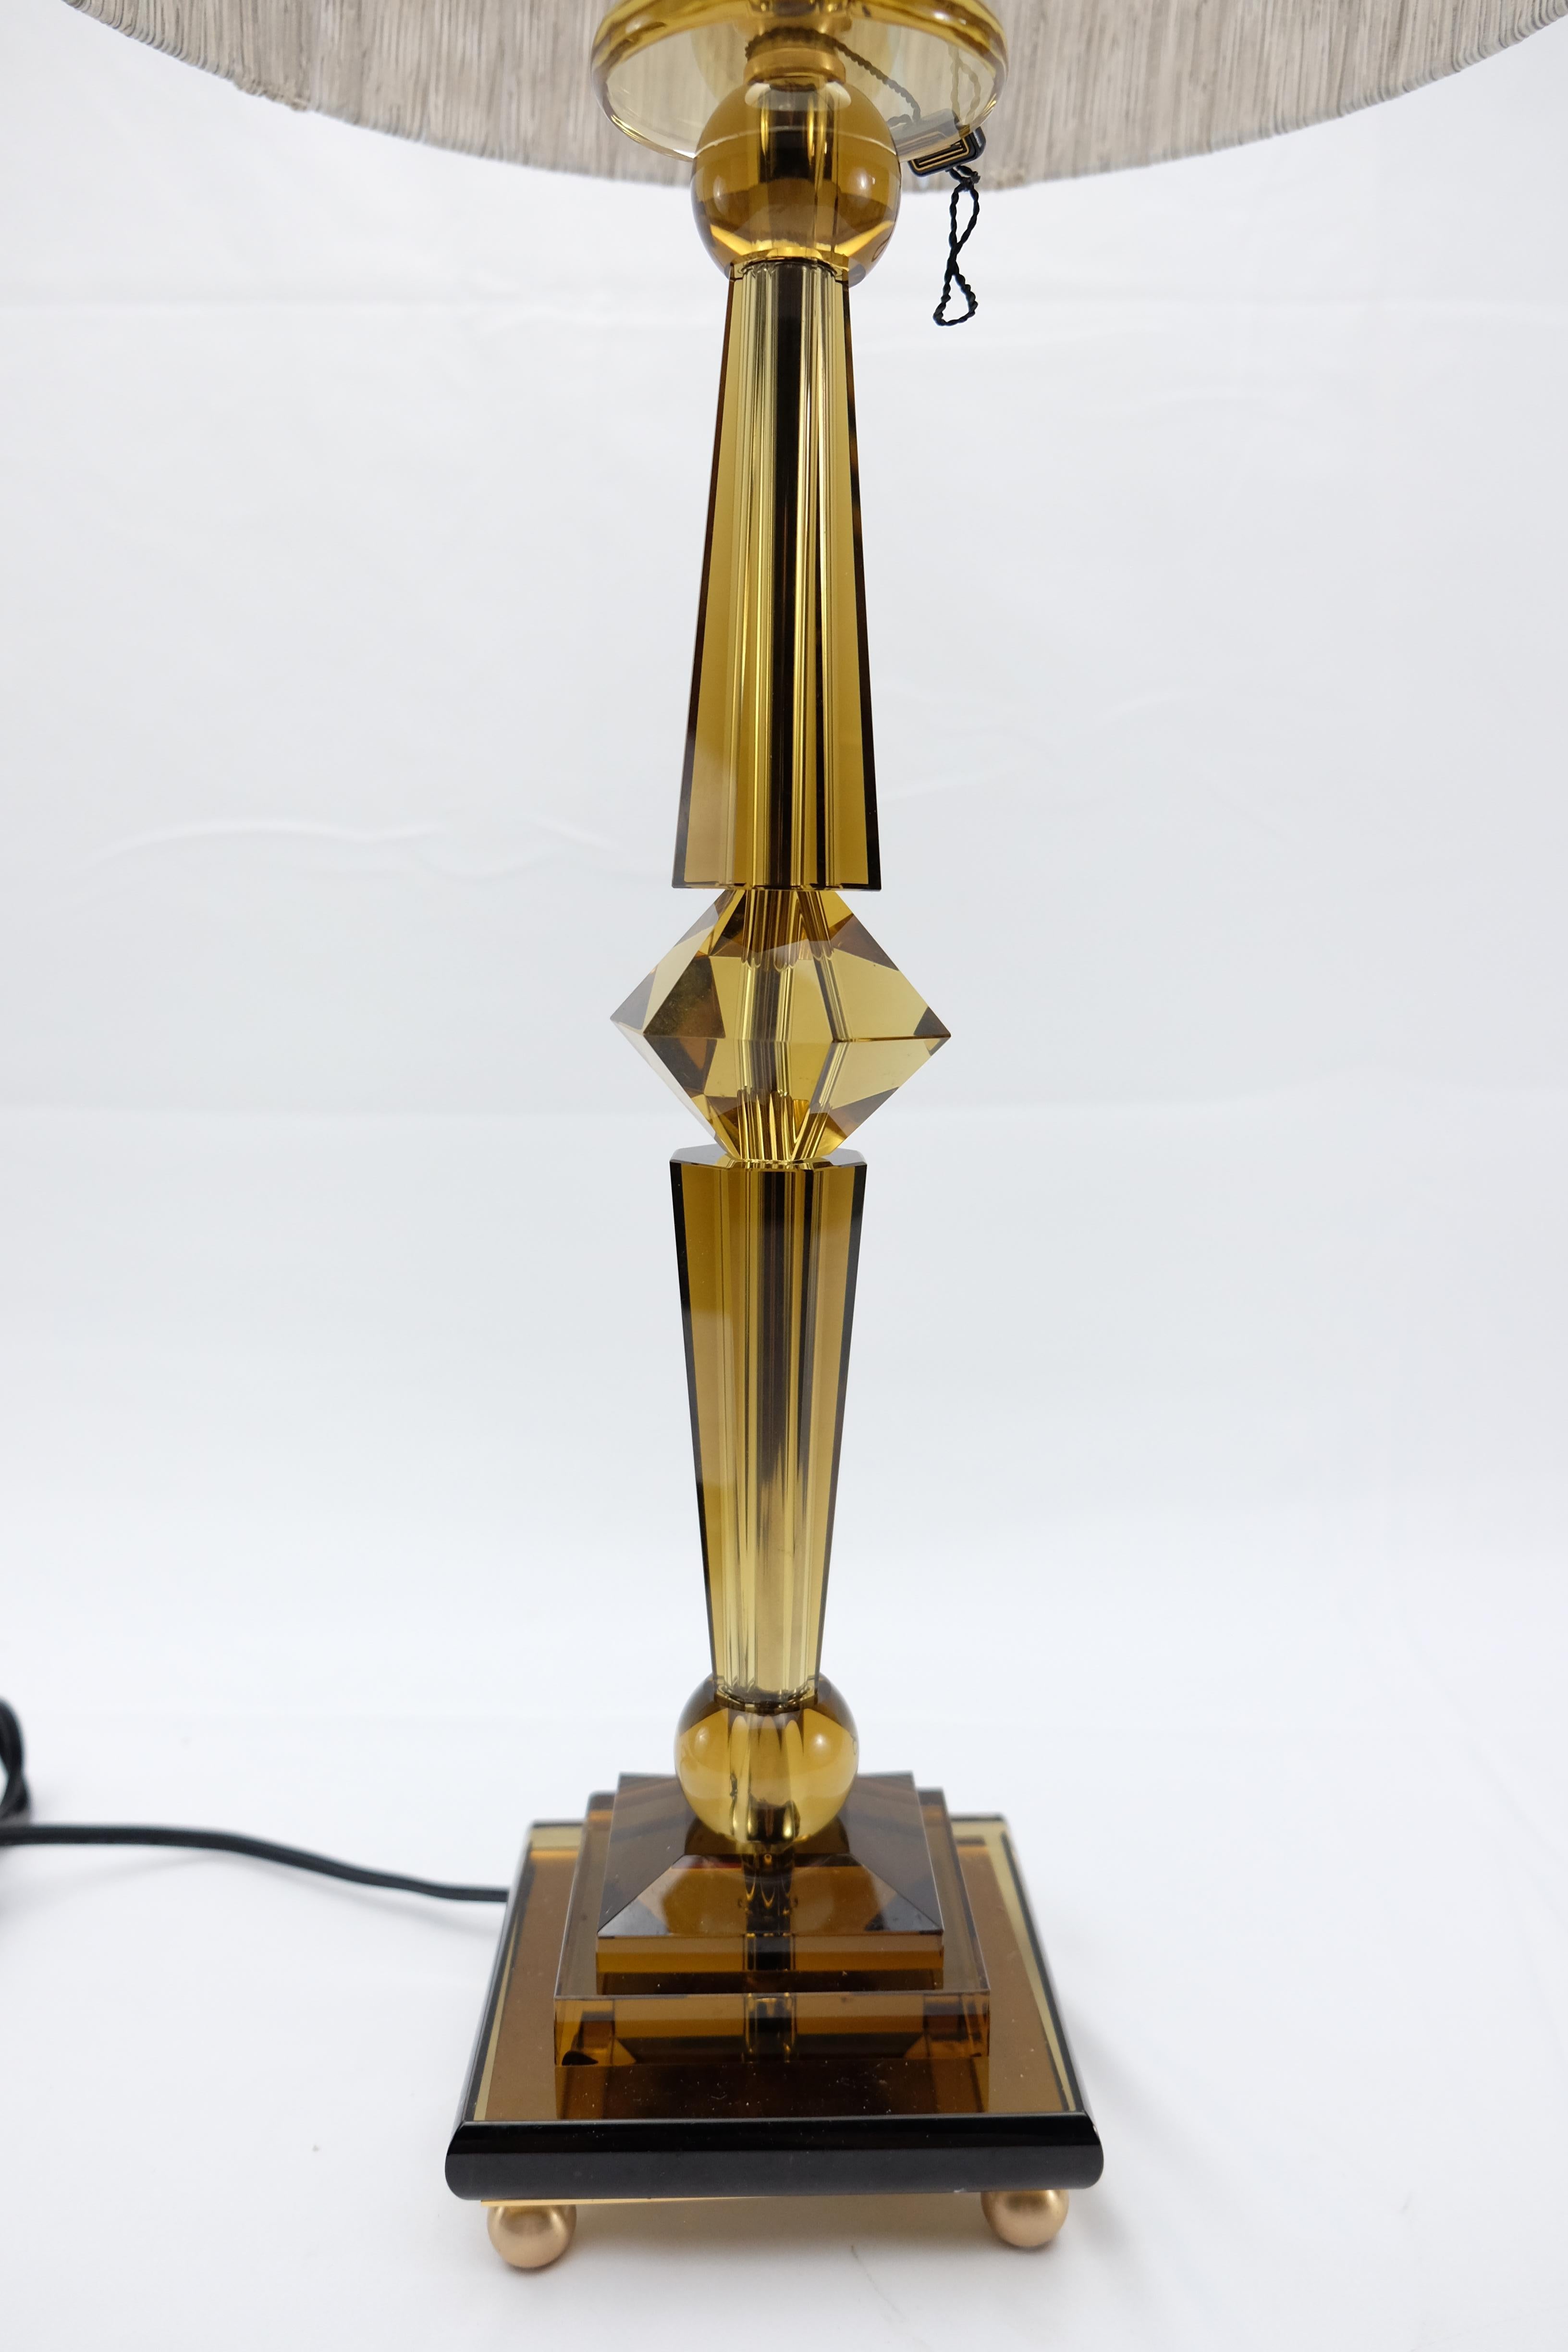 Attilio Amato for Laudarte Srl Prisma Big Table Lamp, Pair Available For Sale 7